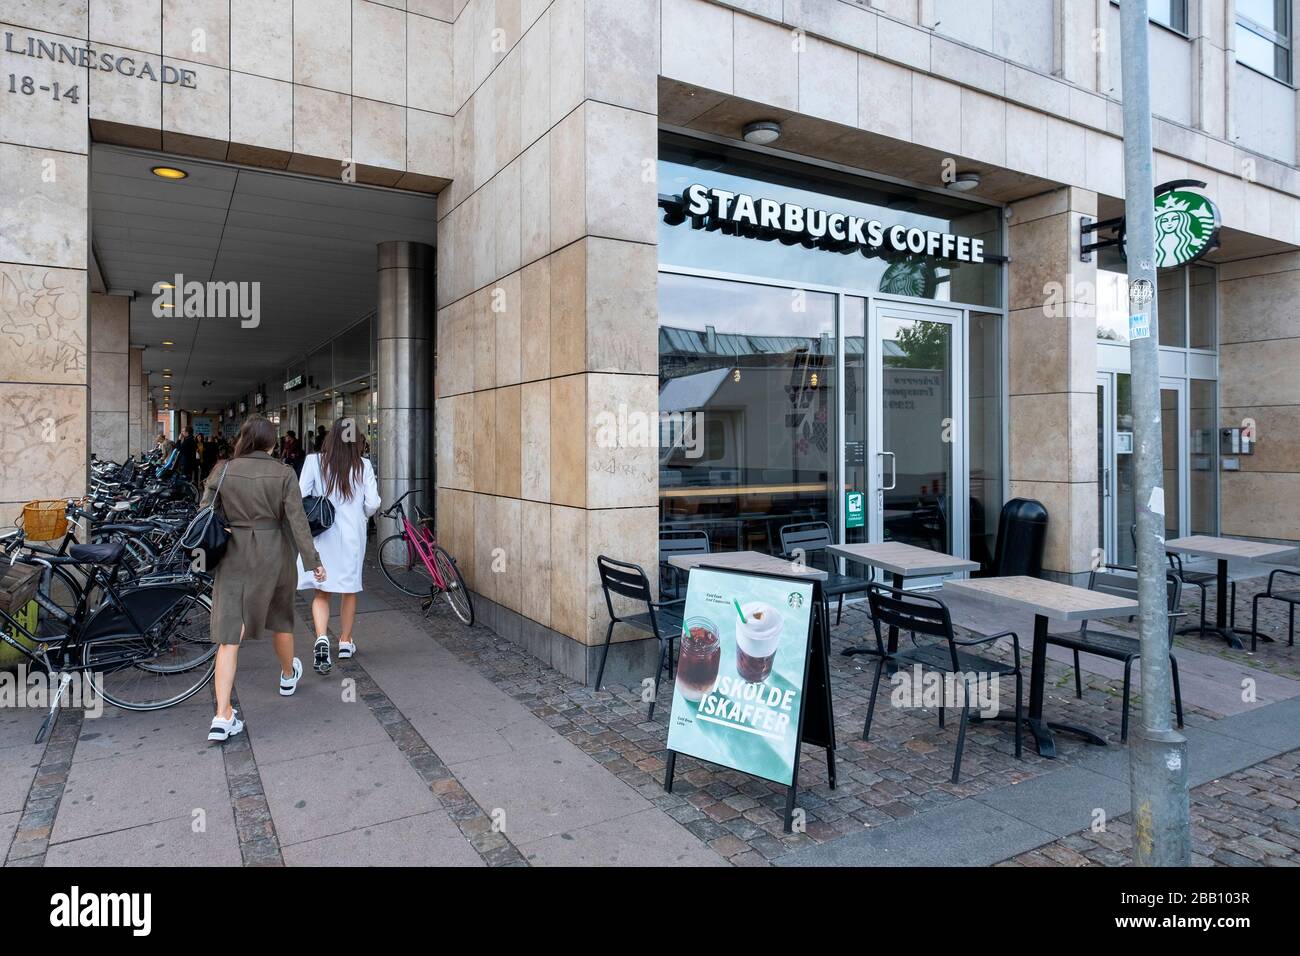 Starbucks Coffee store in Copenhagen, Denmark, Europe Stock Photo